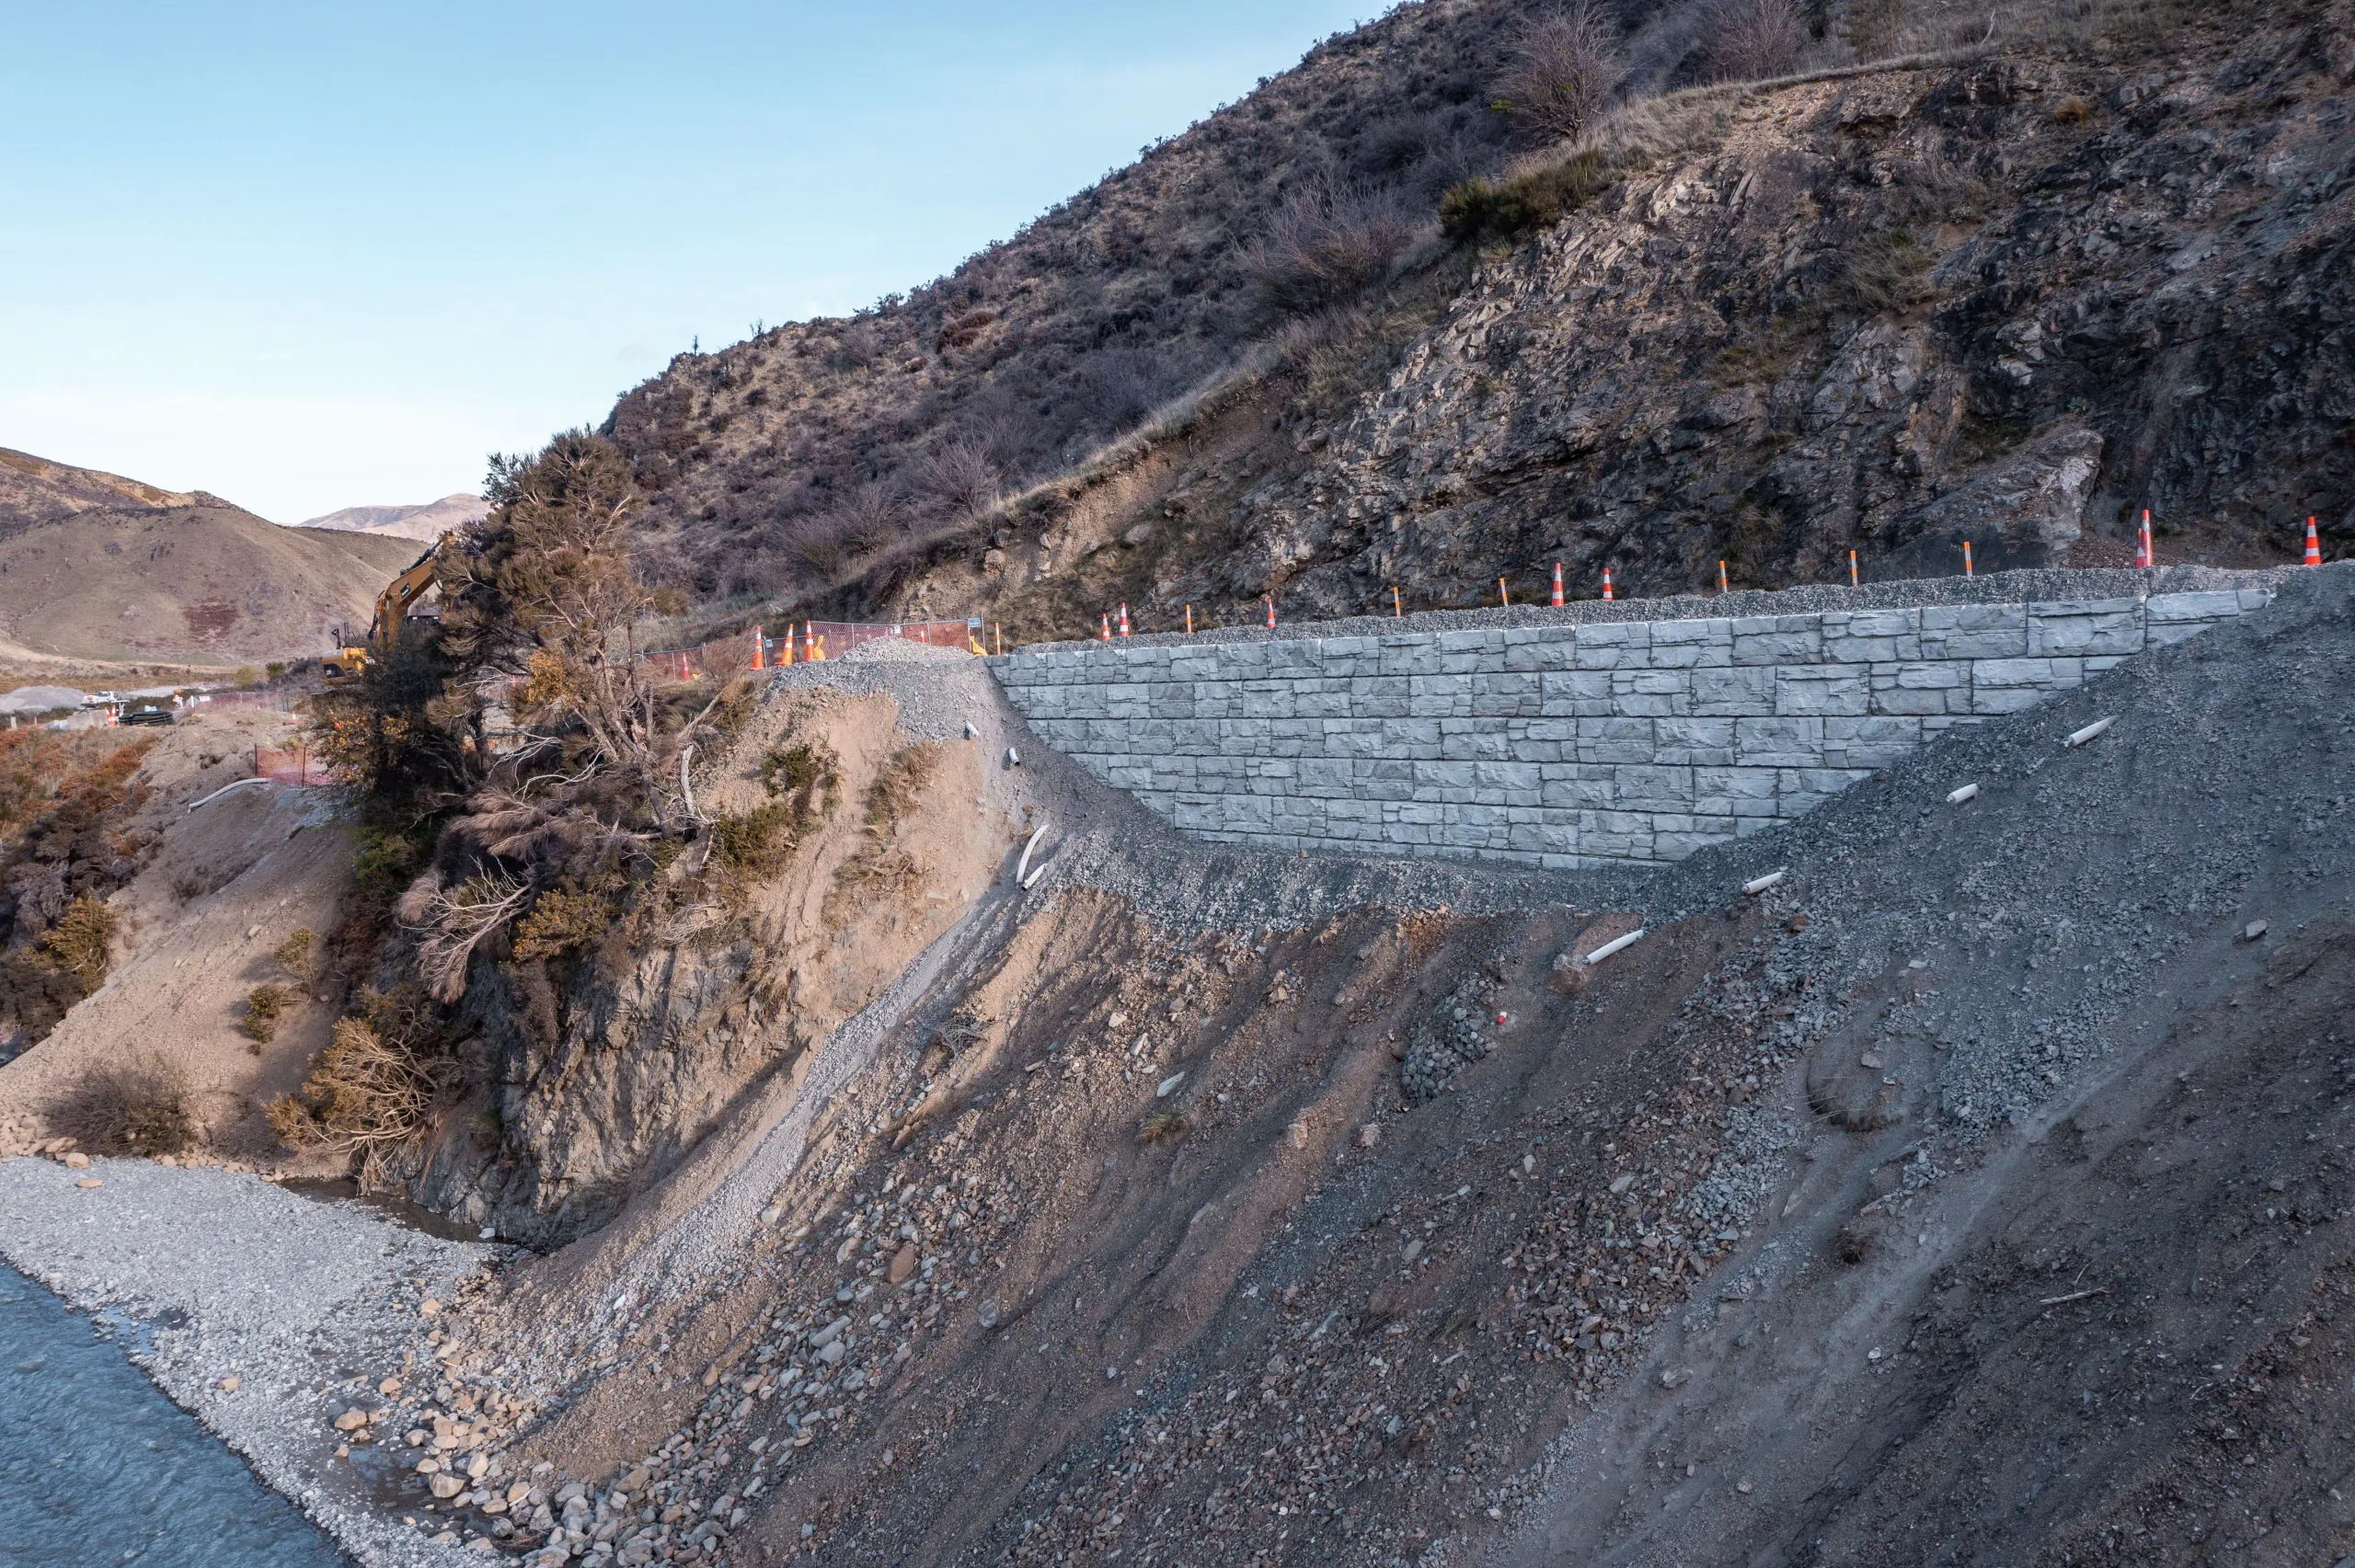 Big Block retaining wall fixes roadway above landslide.